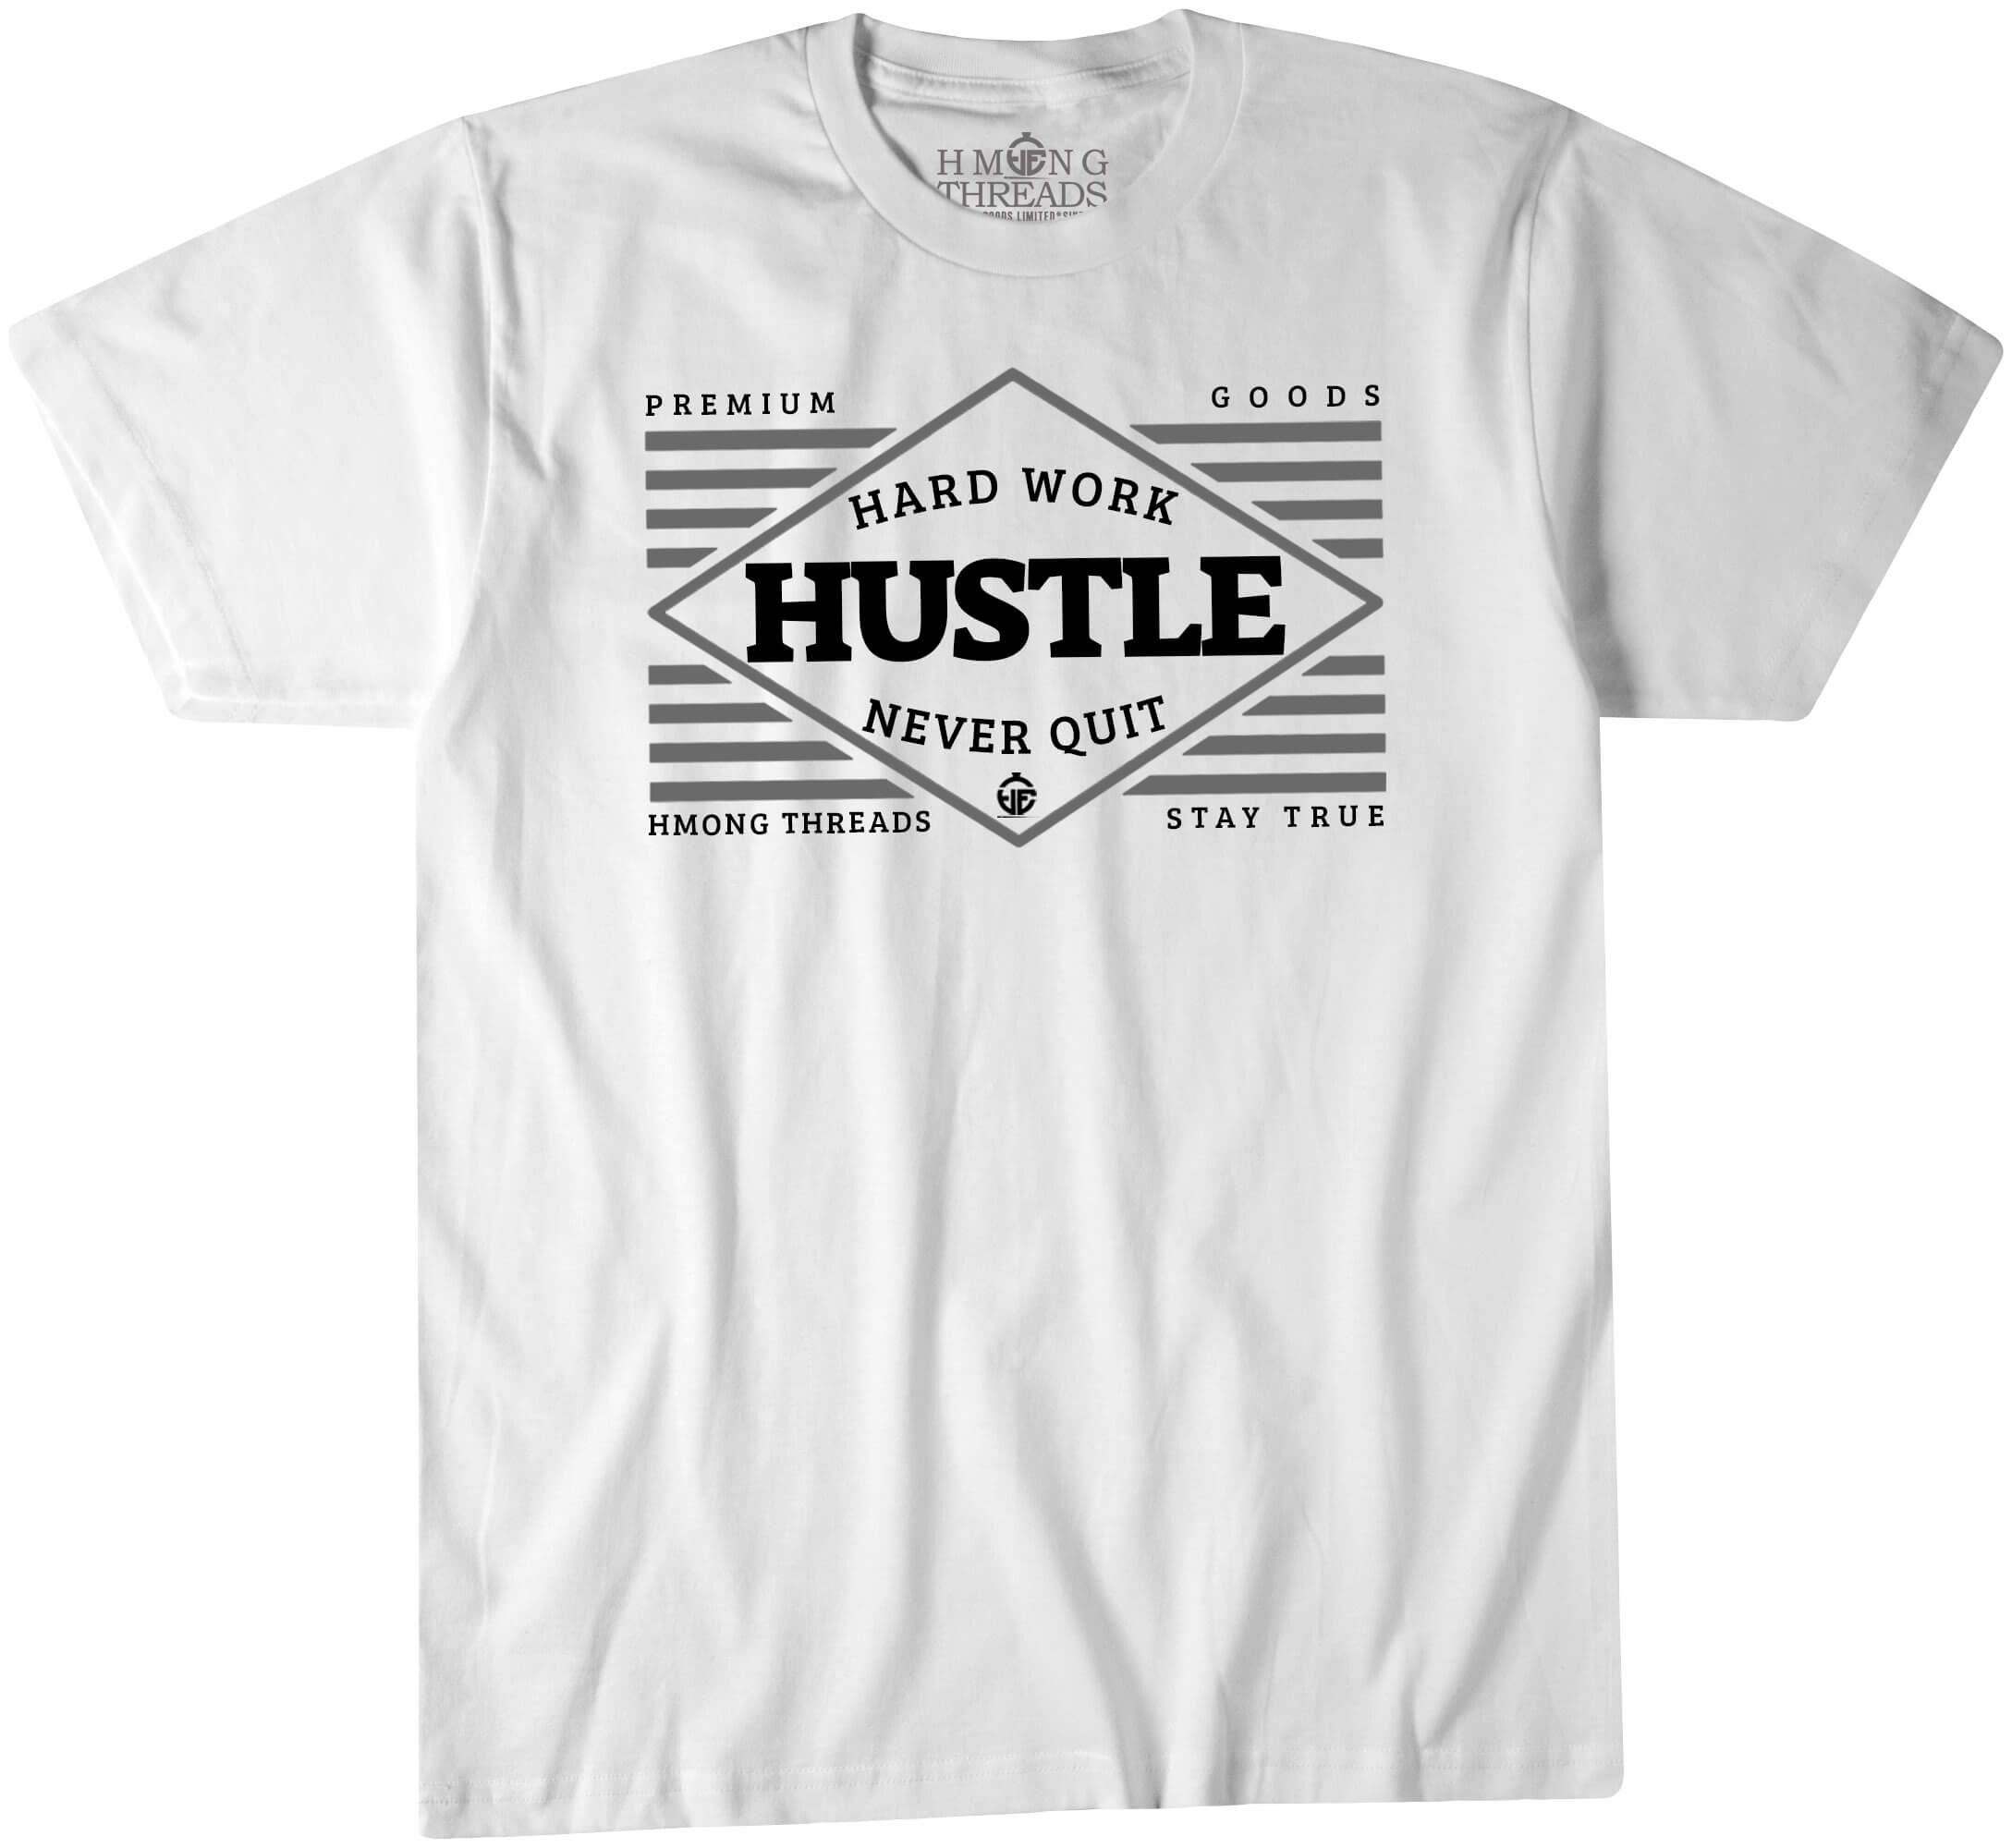 Hustle, Hard Work, Never Quit - White Color T-Shirt - HMONG THREADS